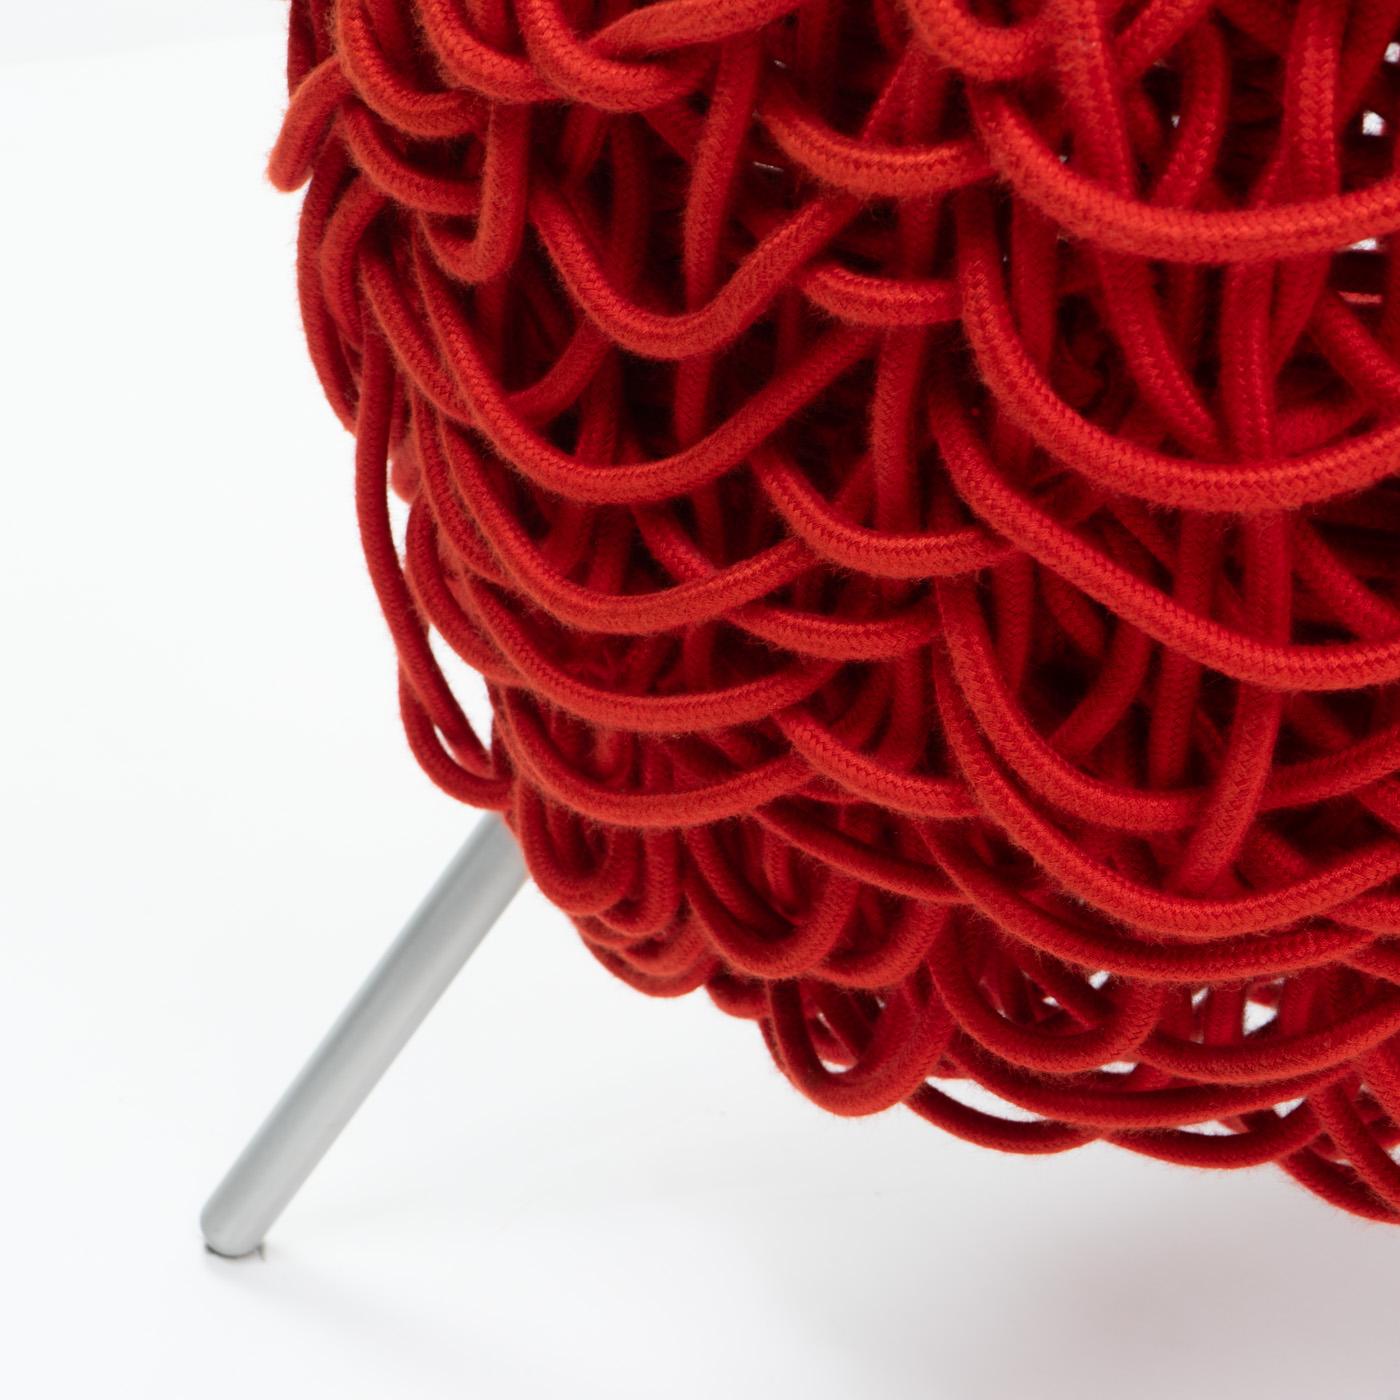 Vermelha Chair, Campana Brothers for Edra, 2000s For Sale 4